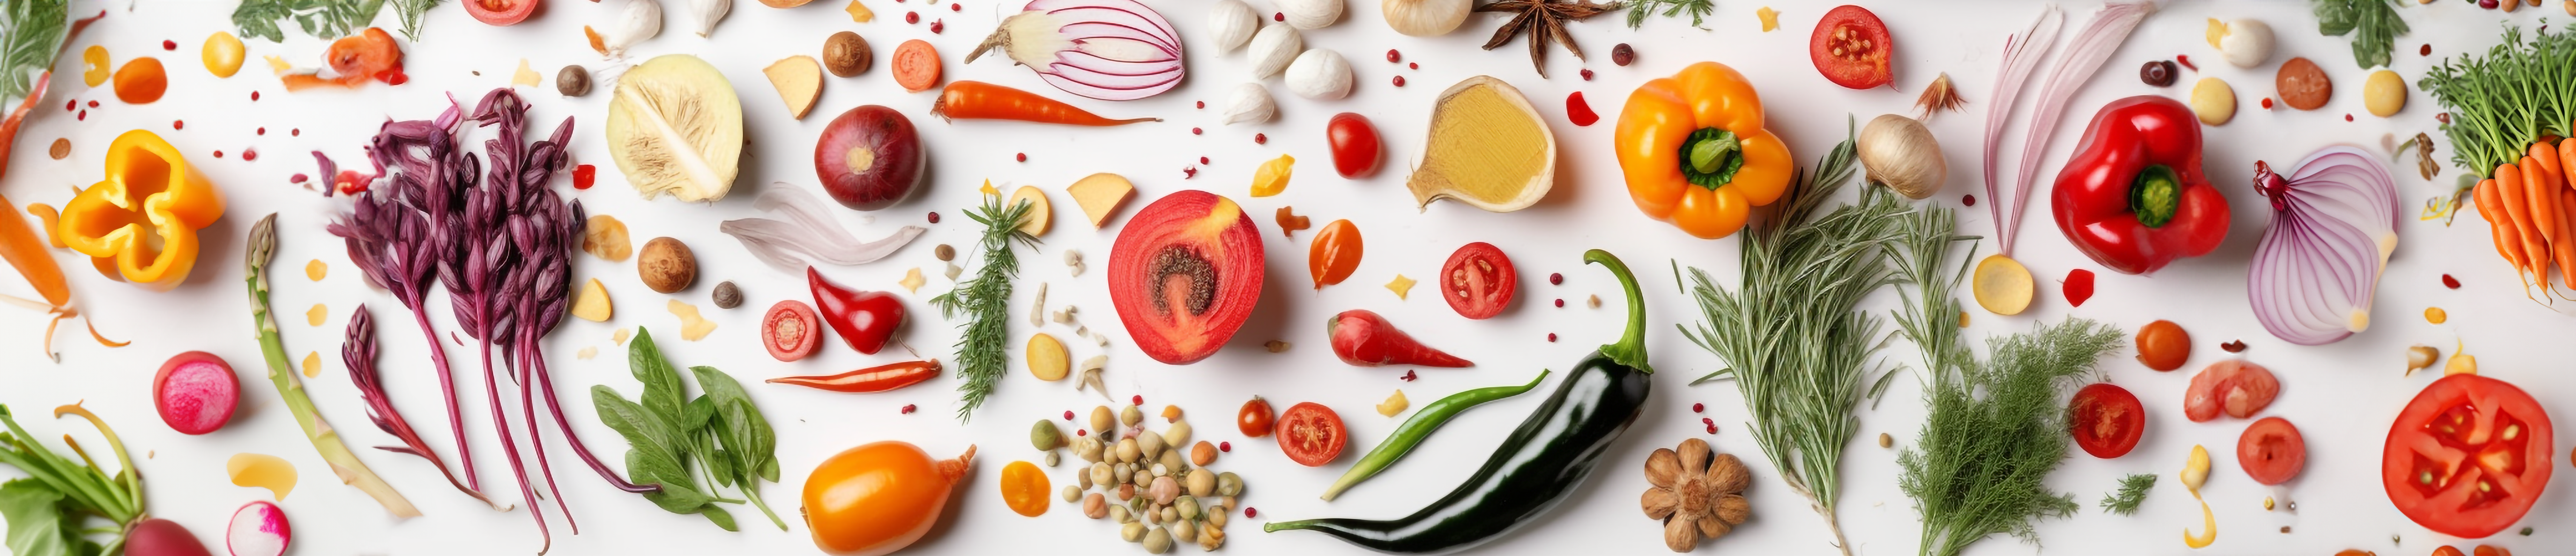 Horizontal header image of various vegetables